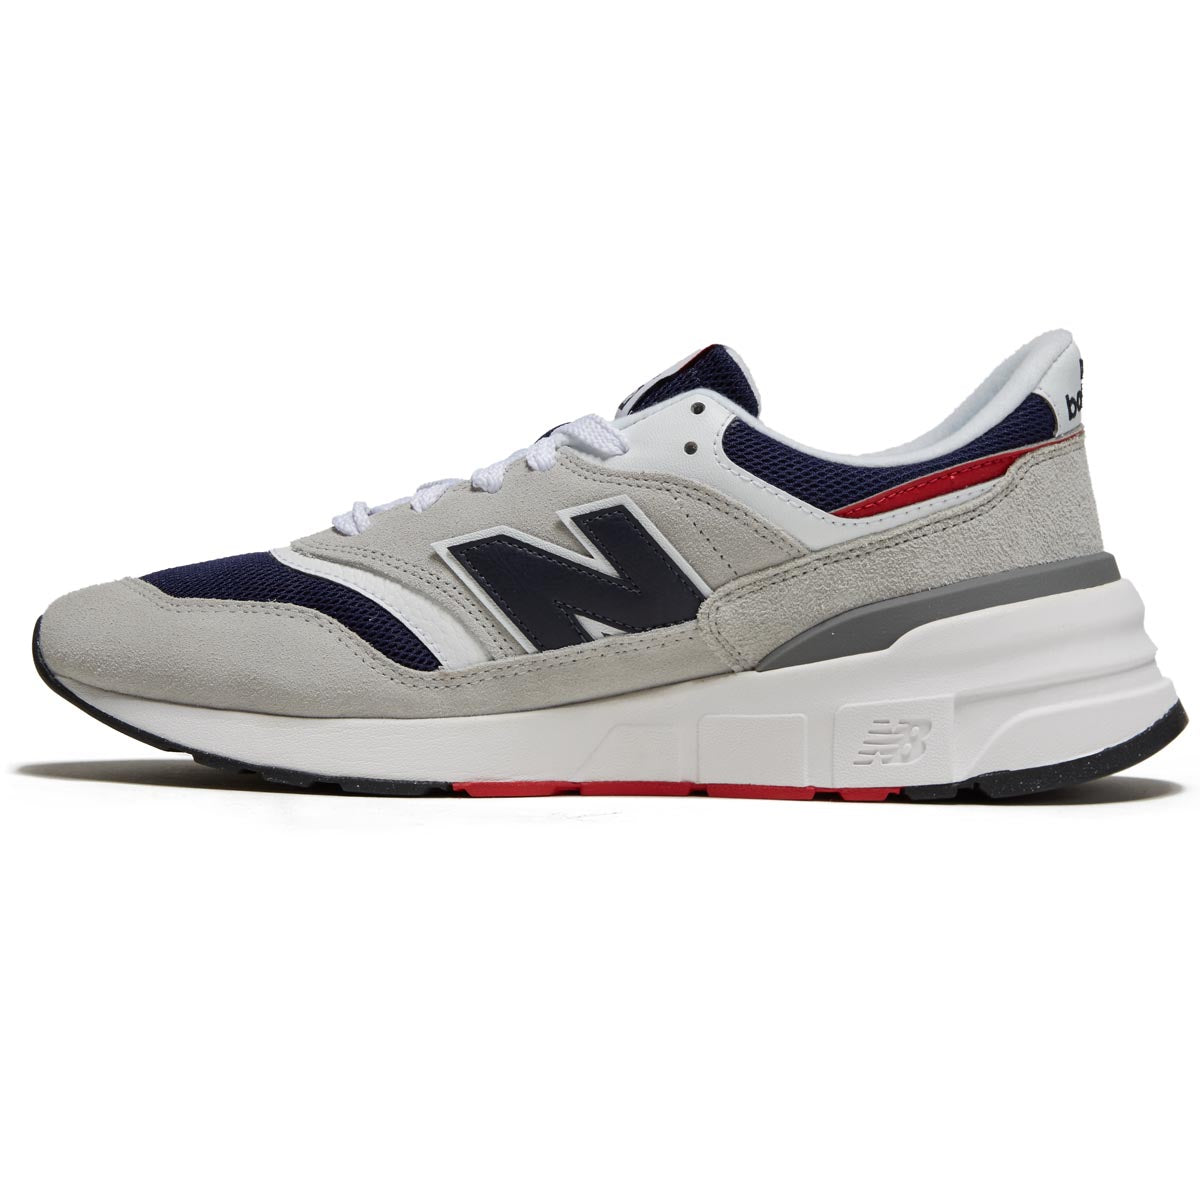 New Balance 997R Shoes - Brighton Grey image 2